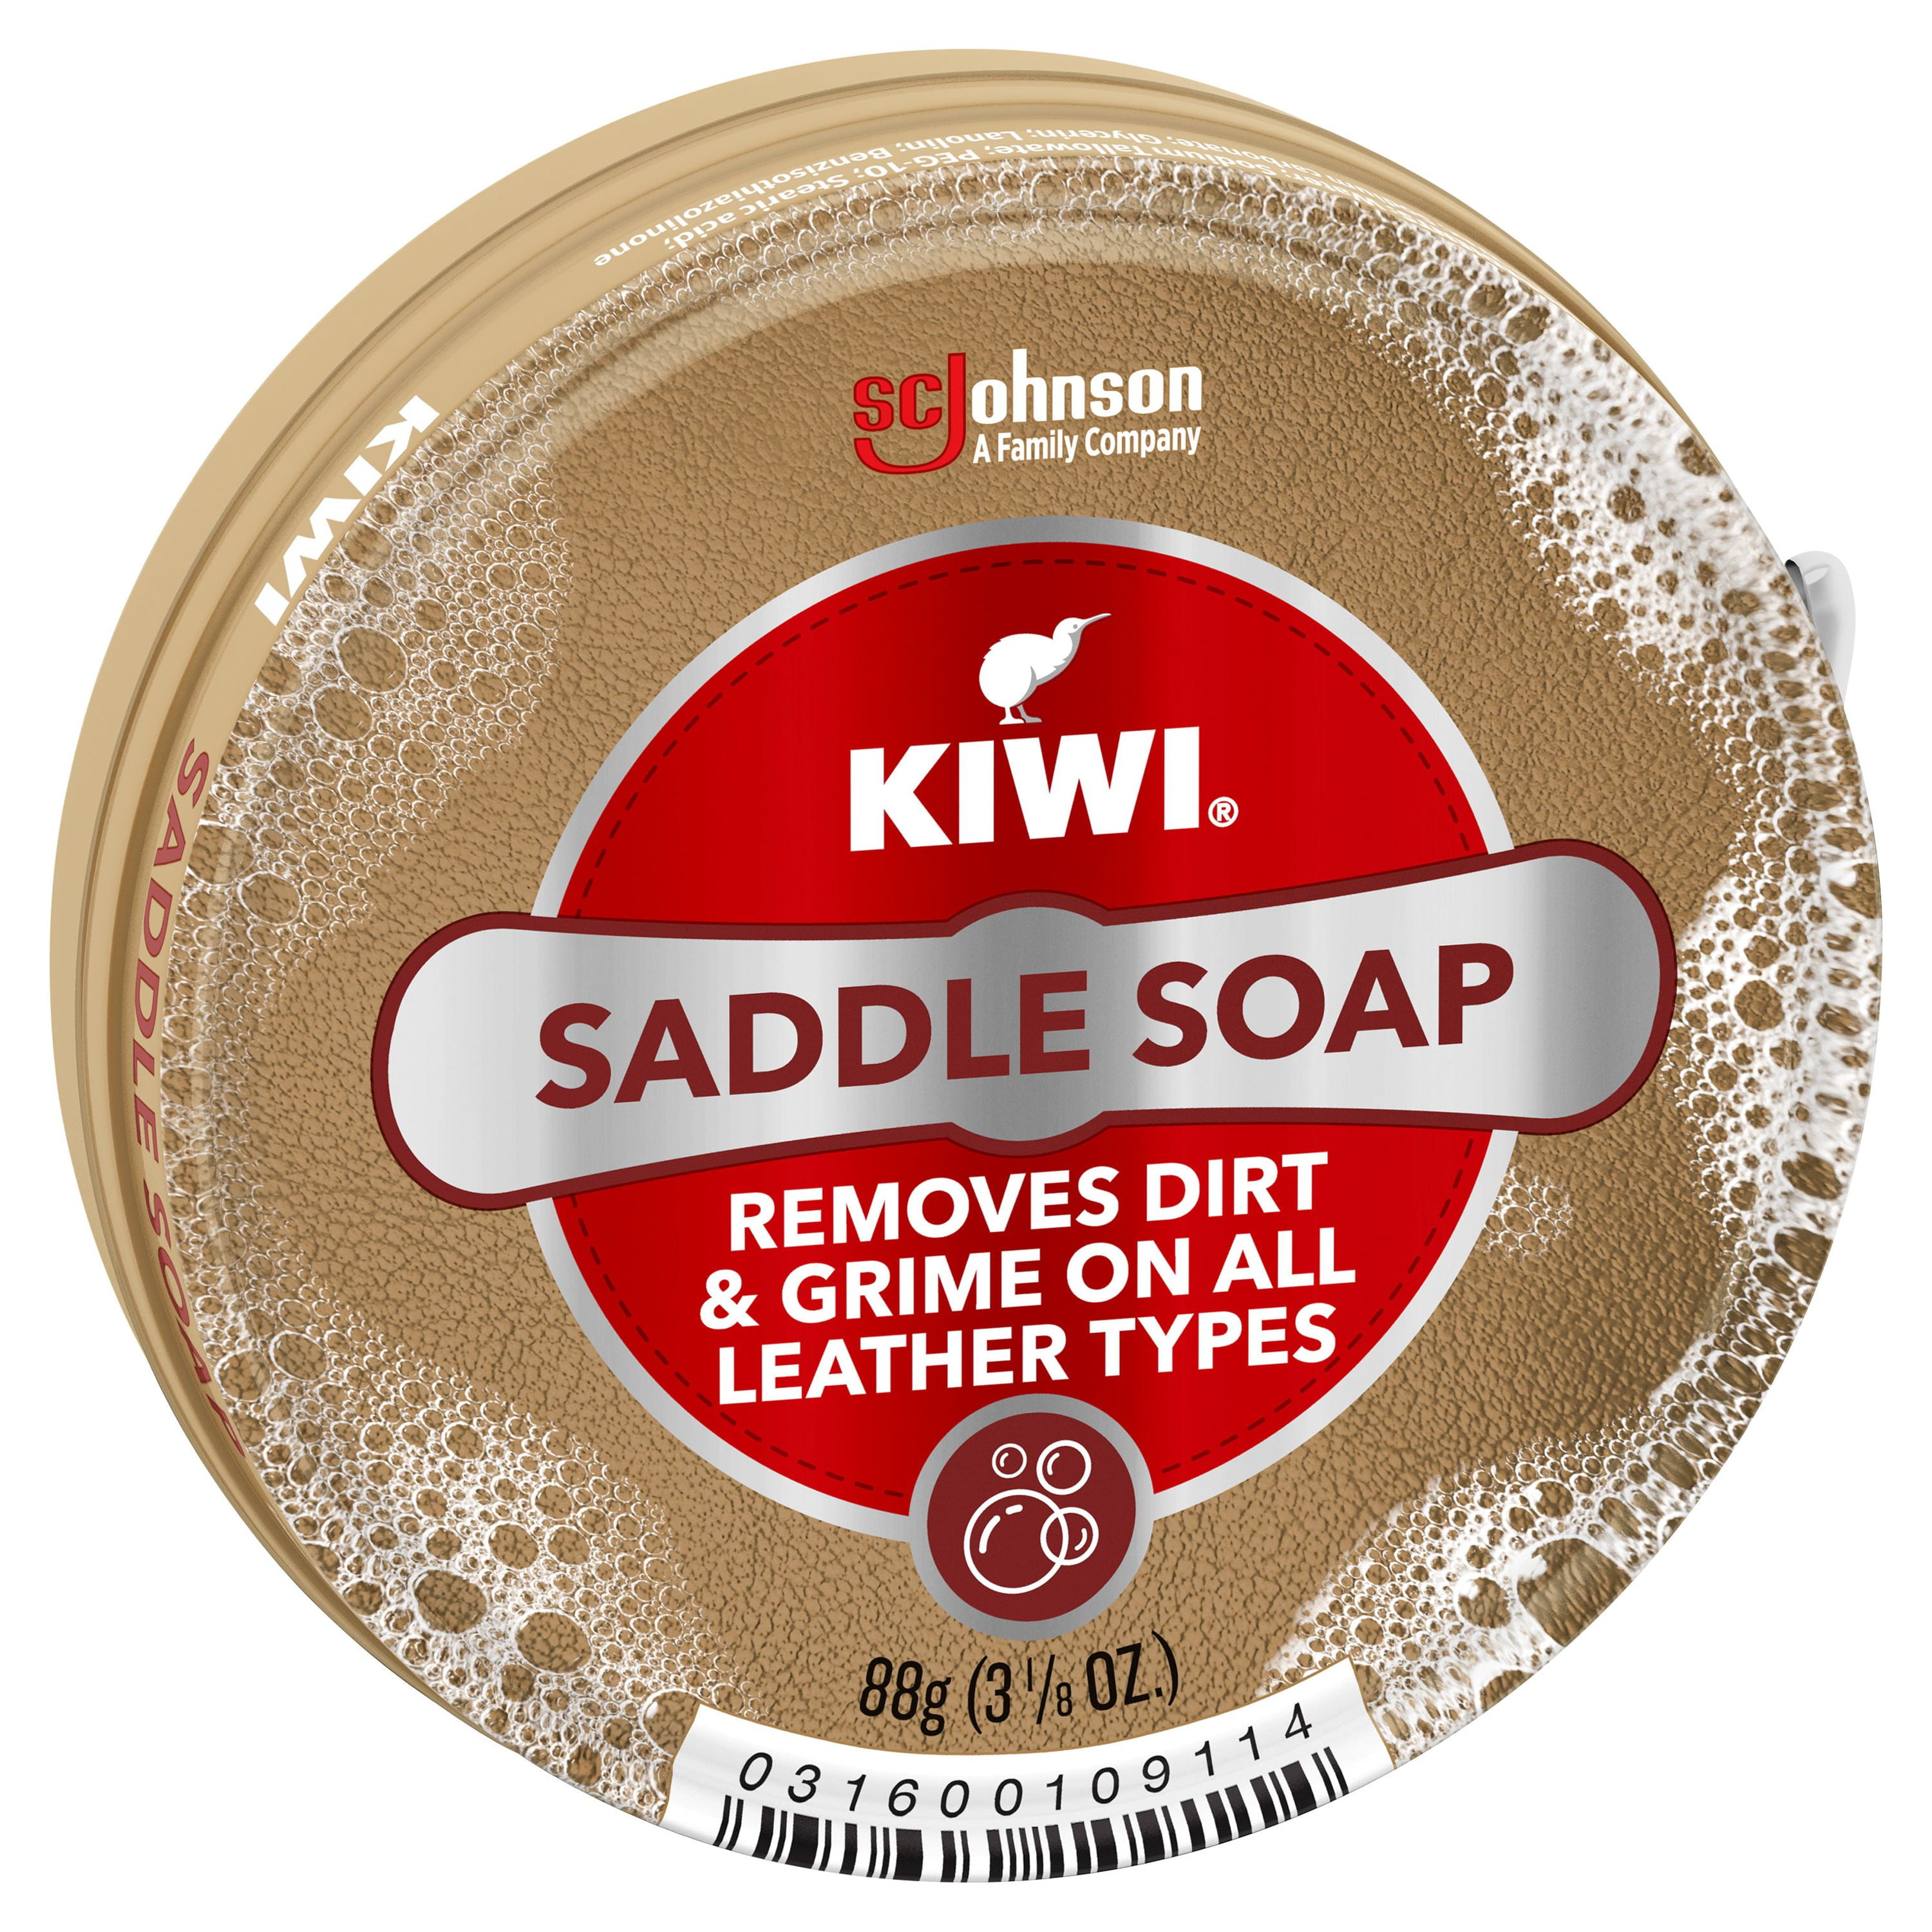 Help my crepe soles! I used the magic eraser and kiwi saddle soap